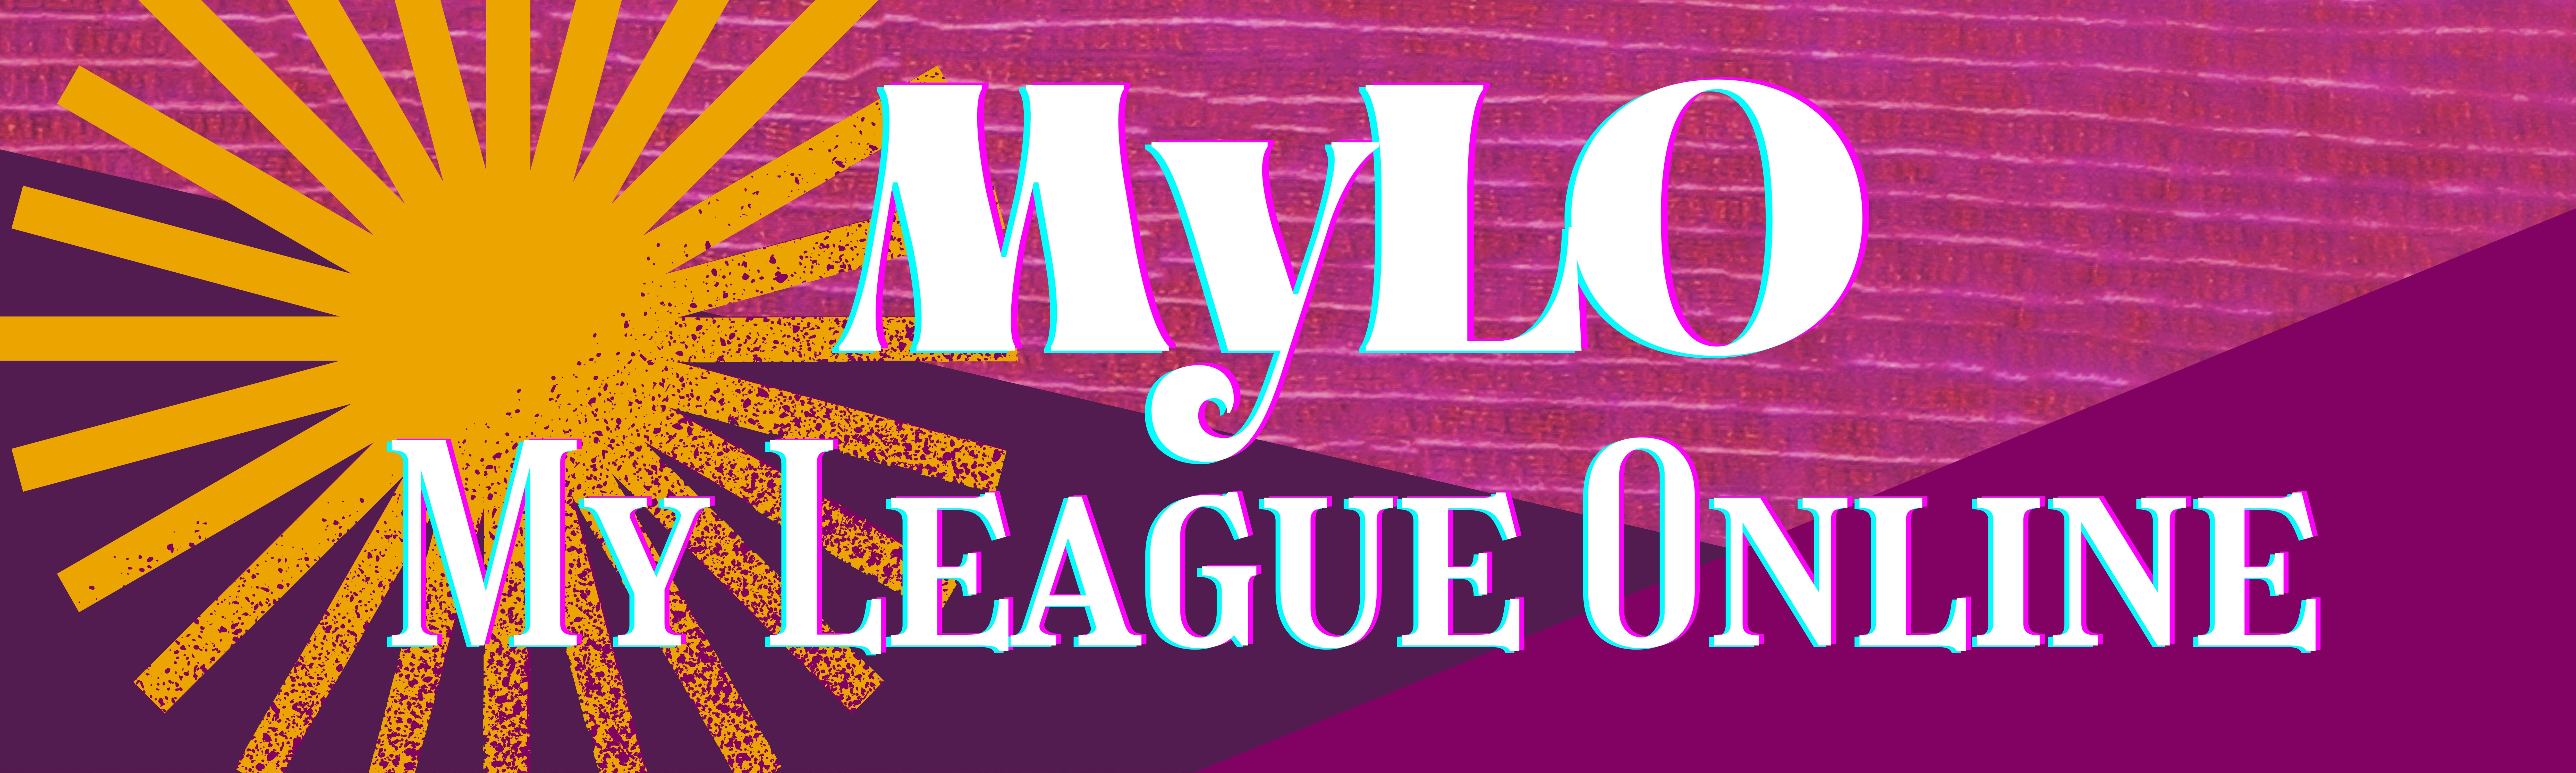 MyLO: My League Online